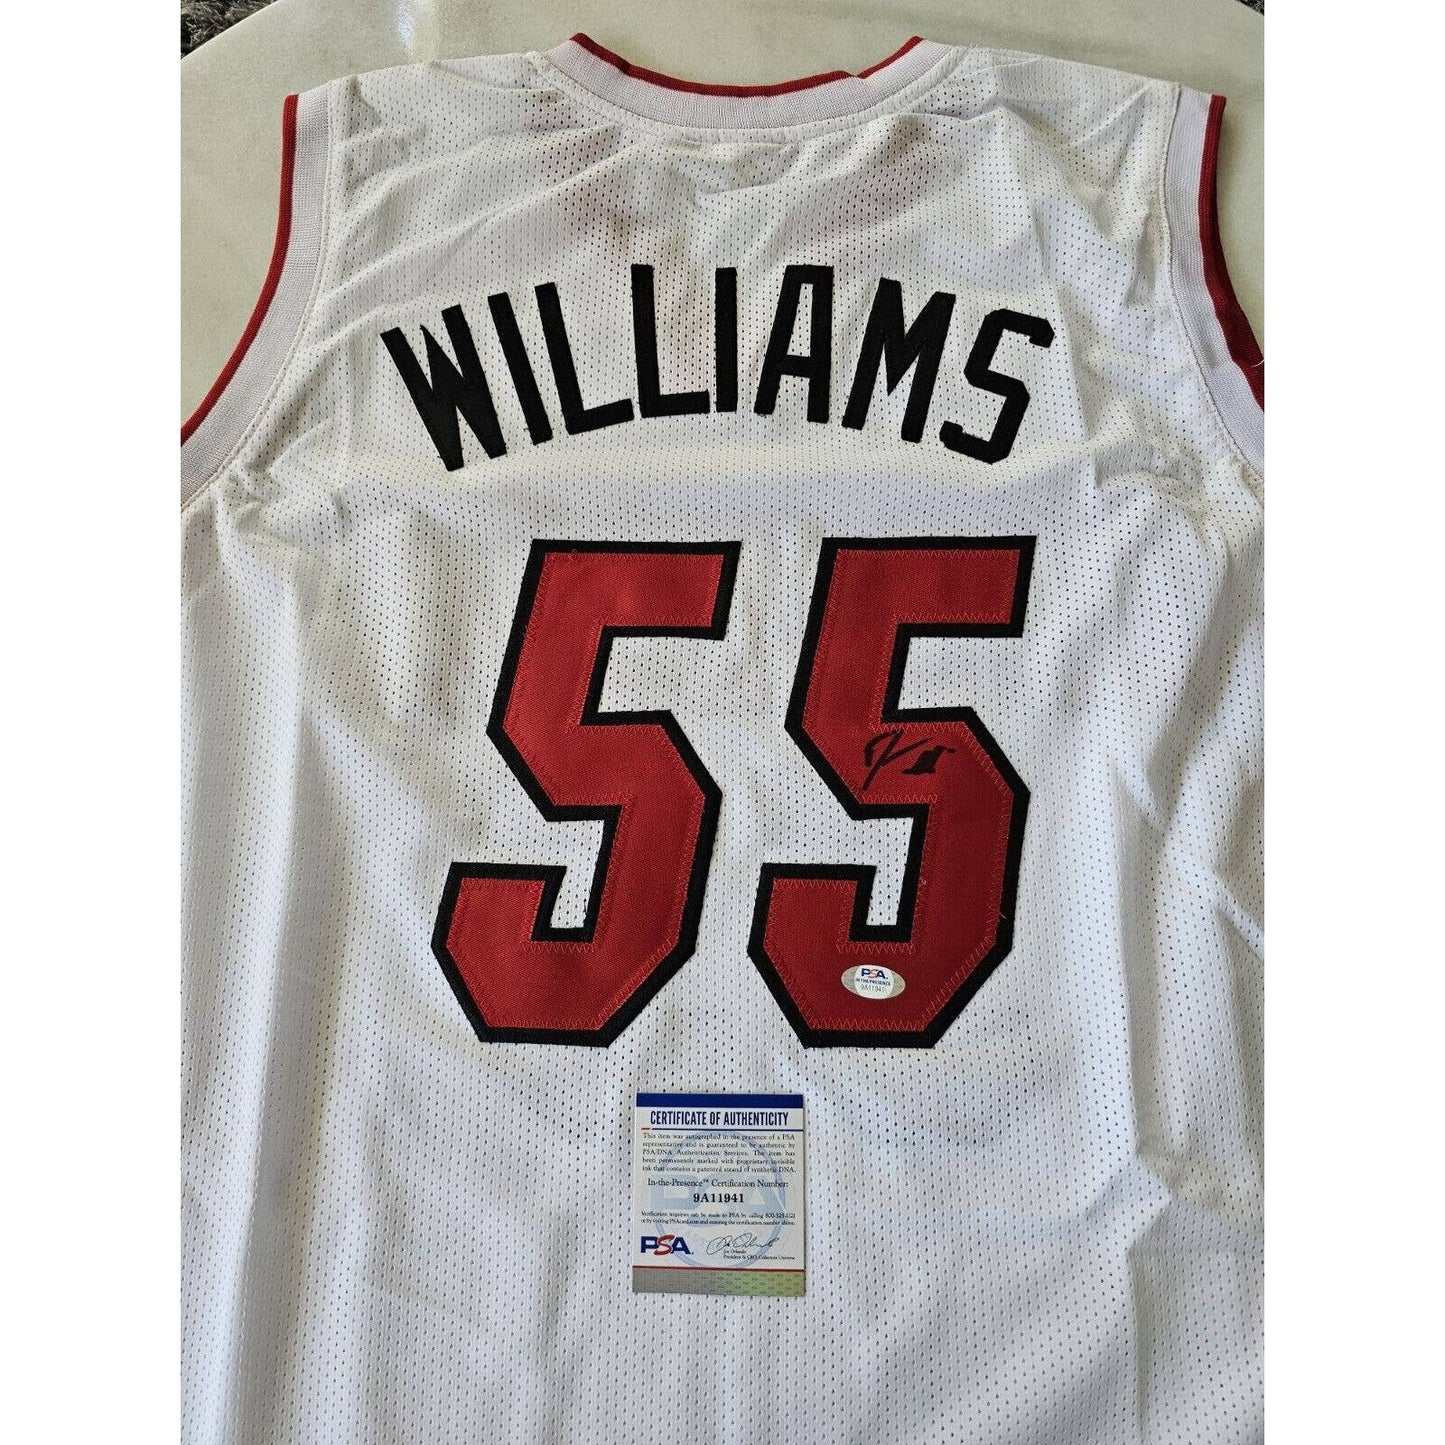 Jason Williams Autographed/Signed Jersey PSA/DNA COA Miami Heat Legend